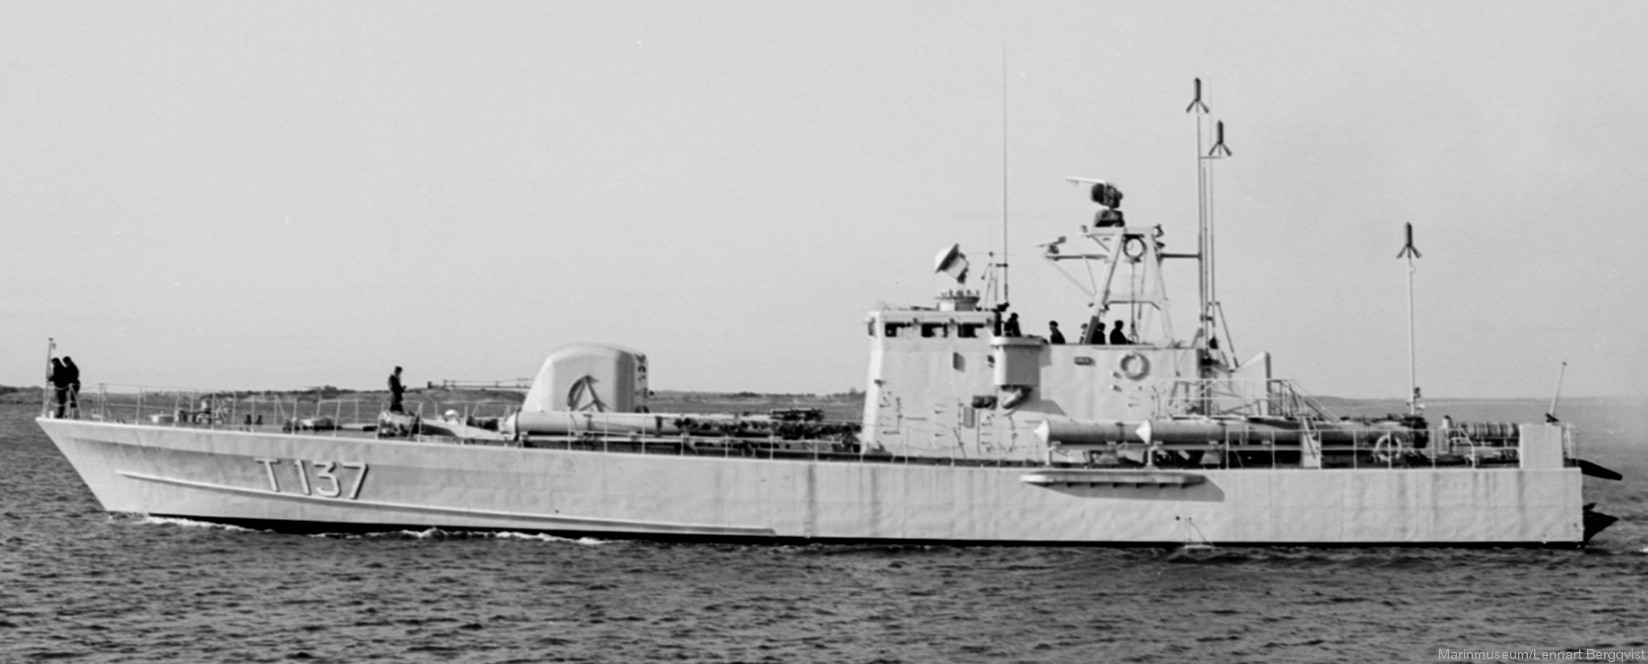 t137 umea hswms hms norrköping class fast attack craft torpedo missile patrol boat swedish navy svenska marinen 05